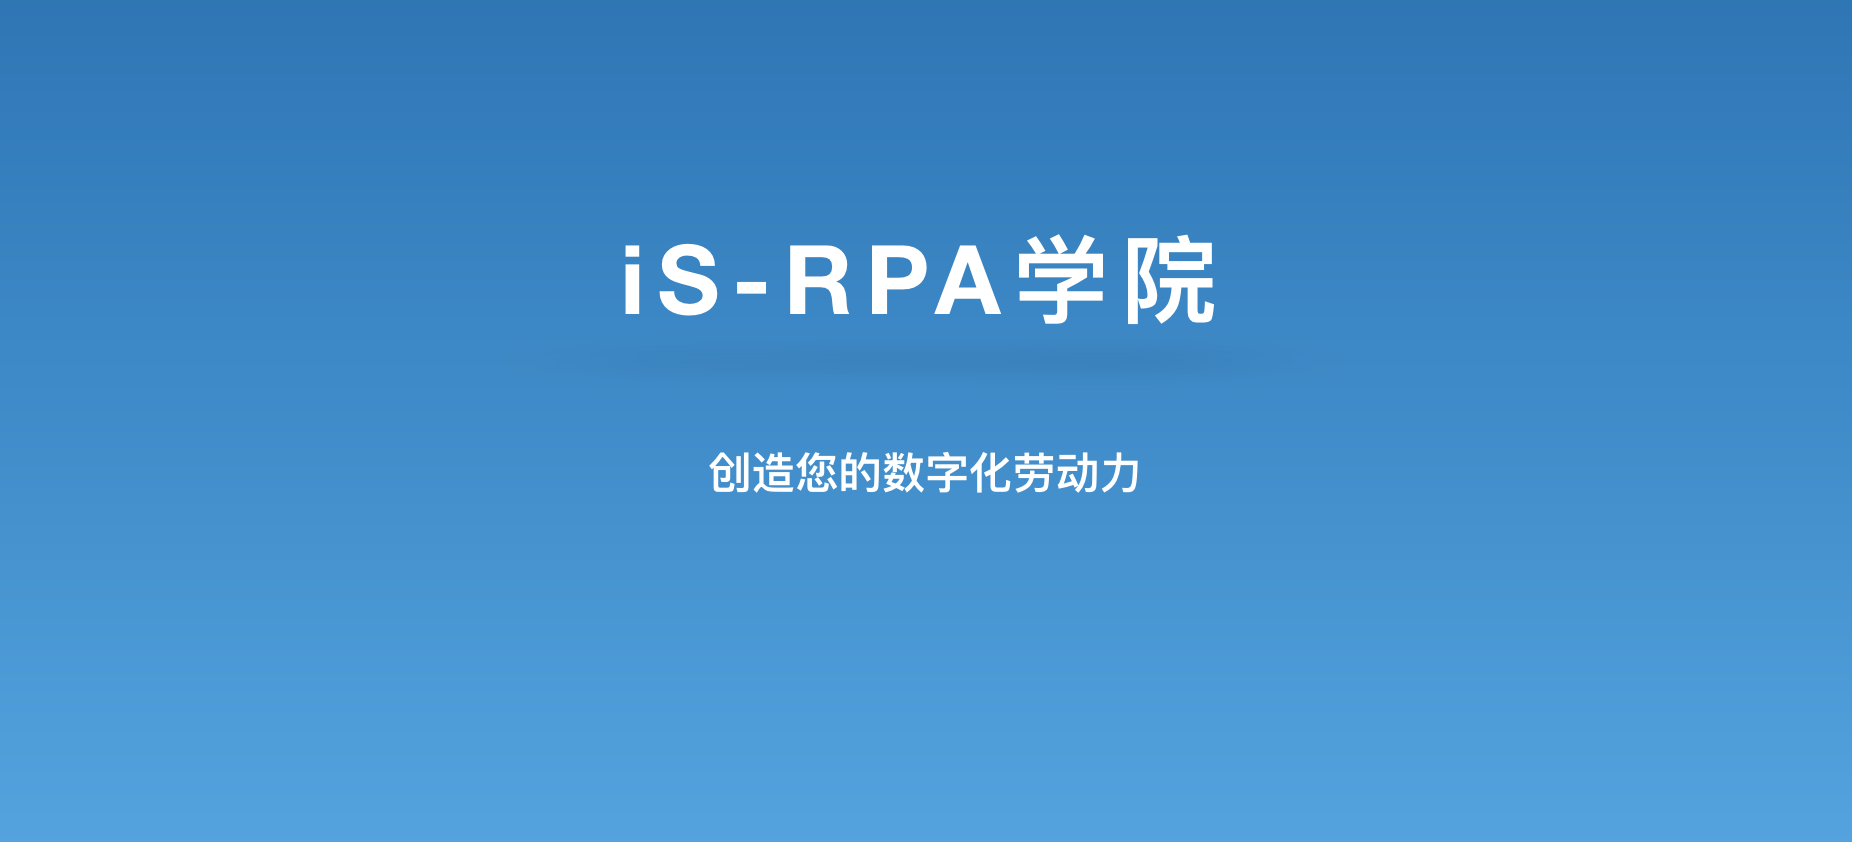 iS-RPA 学院 3 月第 5 周（03/25-03/29）培训安排